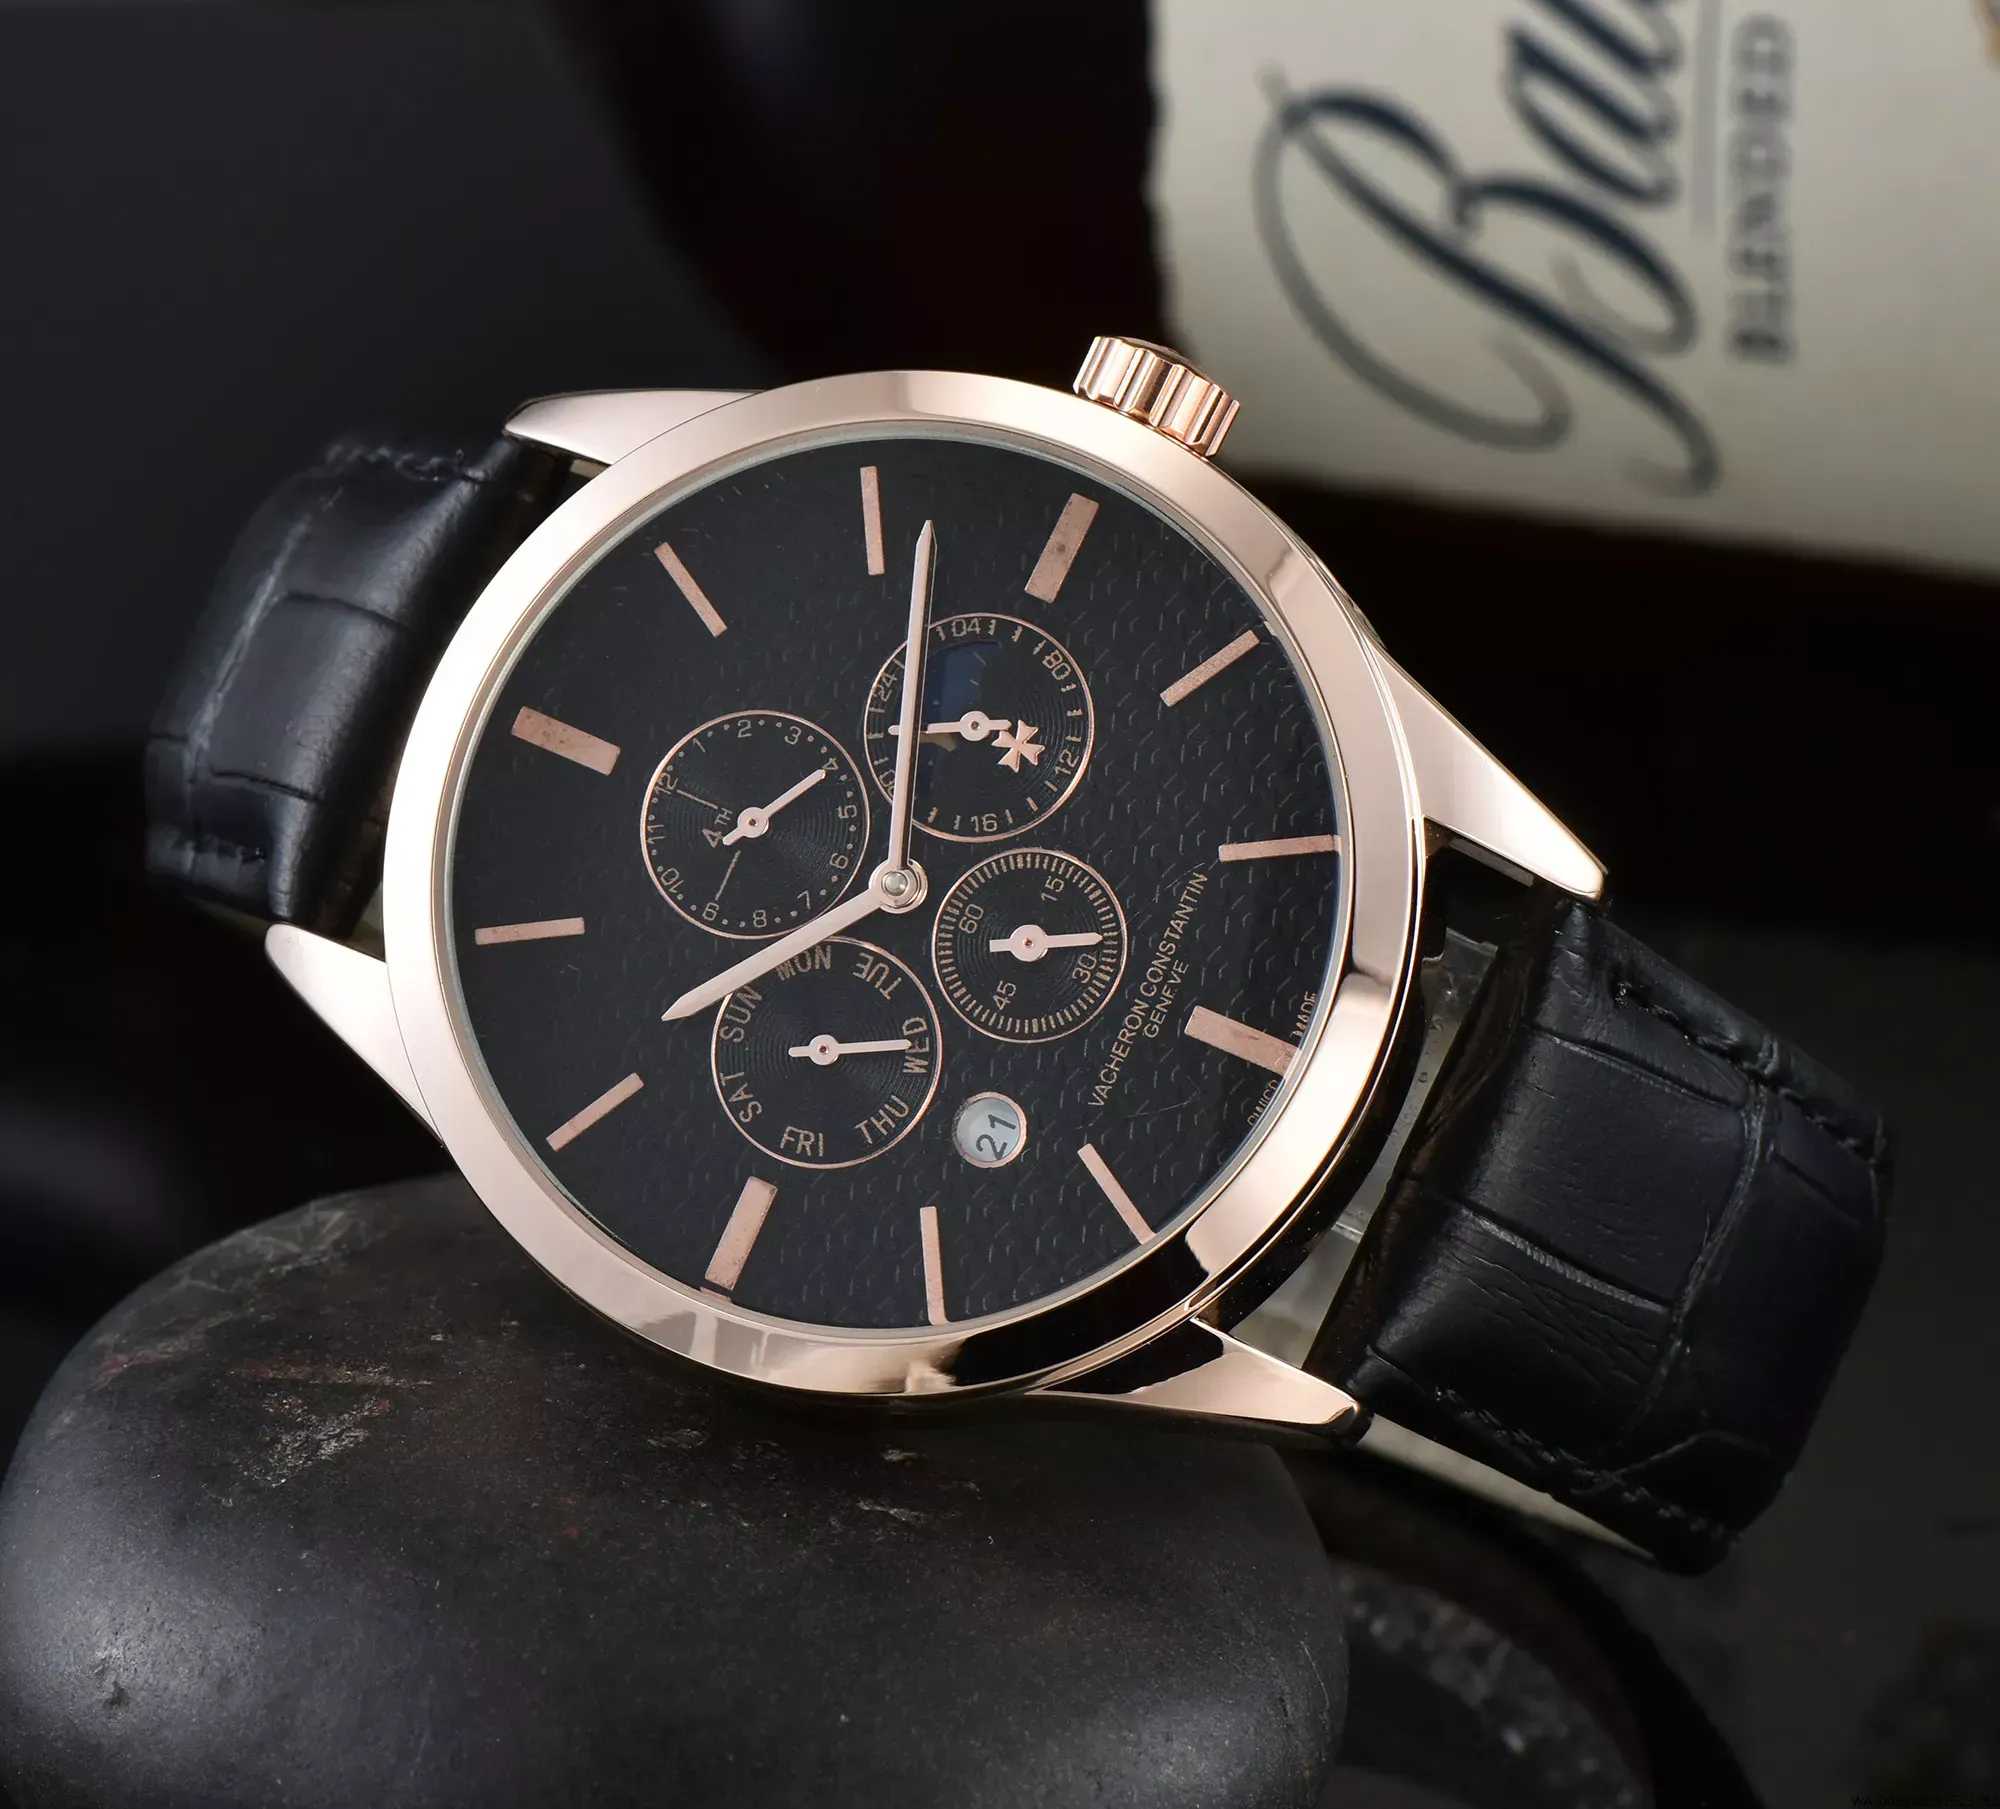 Vach New Yupoo Watch Mens Quartzwatch 운동 방수 고품질 손목 시계 시간 핸드 디스플레이 간단한 고급 인기있는 시계 가죽 스트랩 디자이너 시계